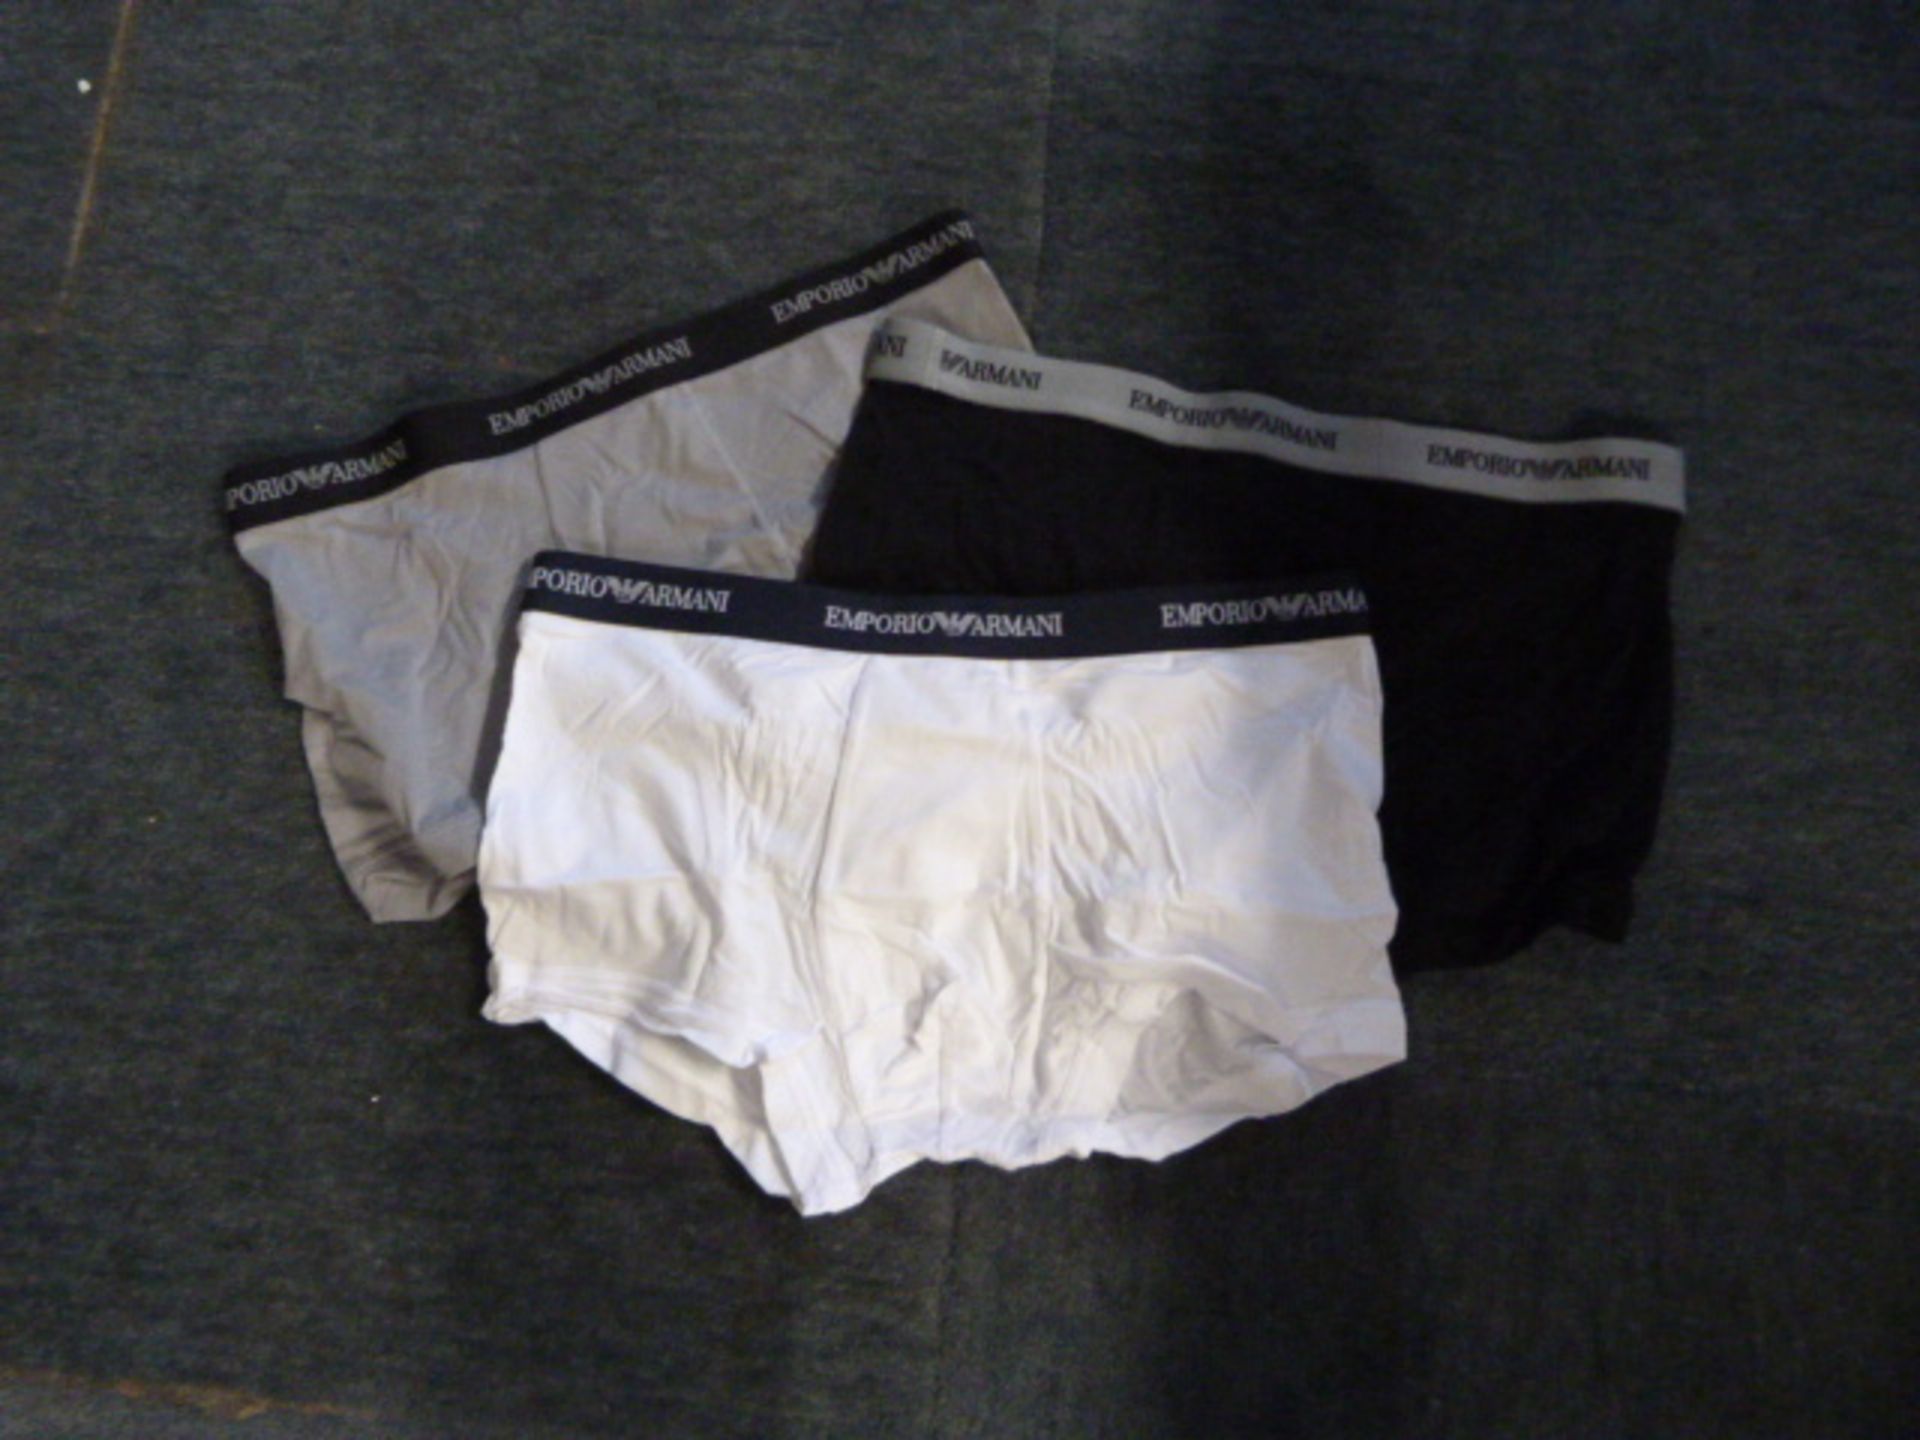 3 Pairs of Emporio Armani Men's Stretch Cotton Boxer Sorts Size: L (new)